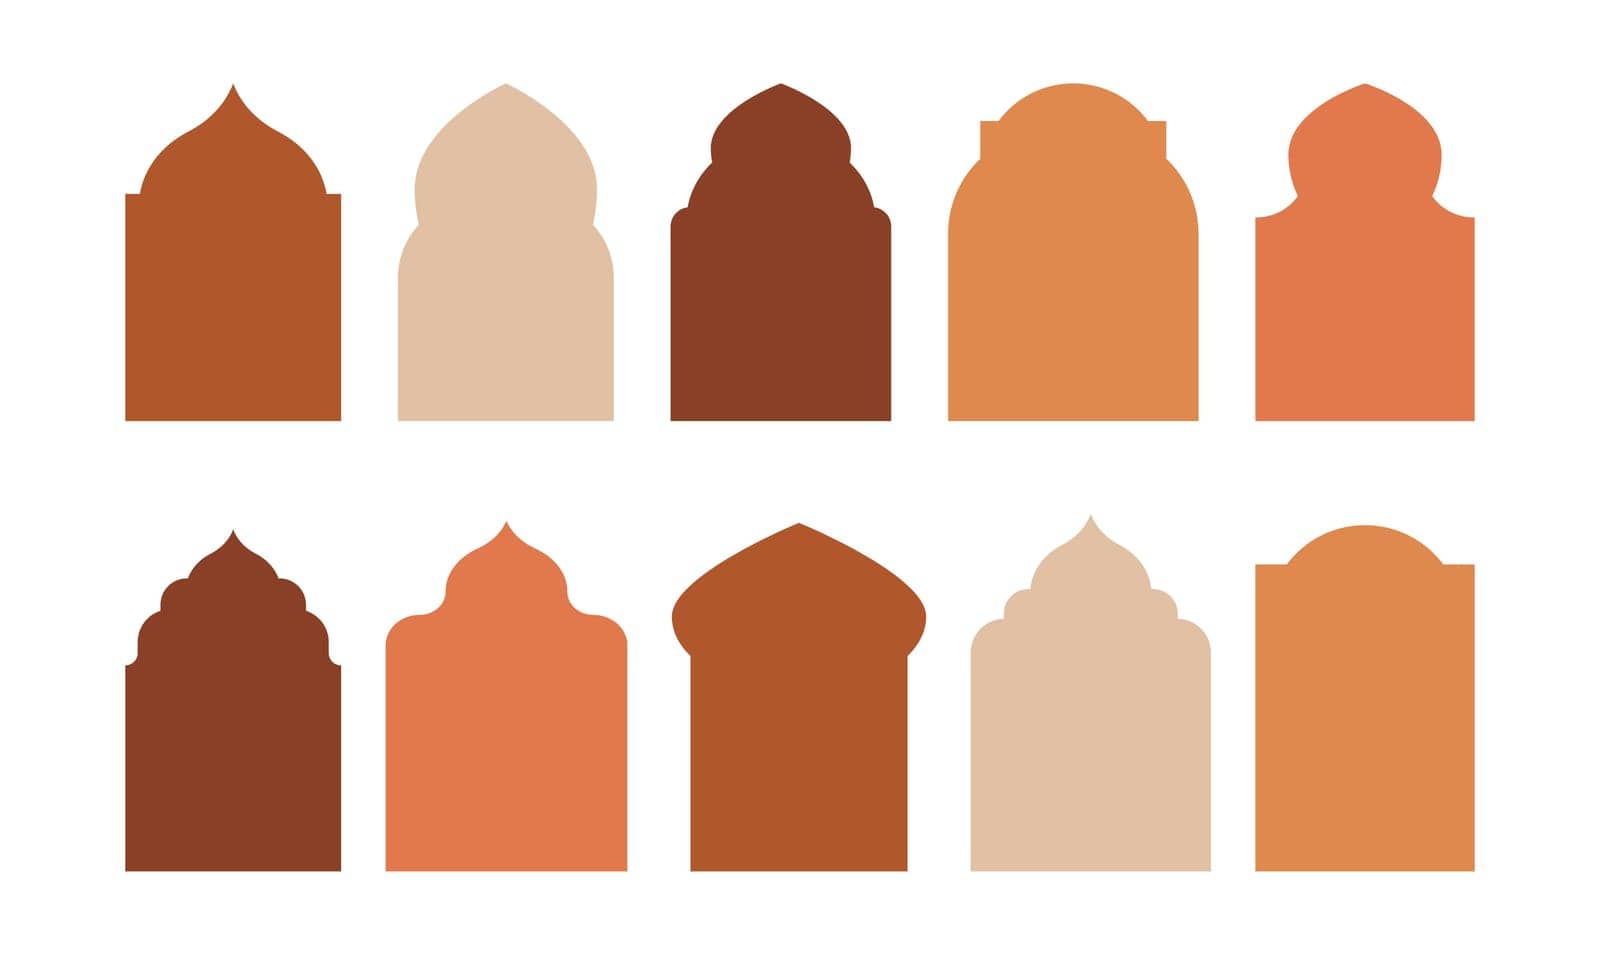 Islamic and ramadan kareem windows in oriental style. Border and frame with modern boho design template.